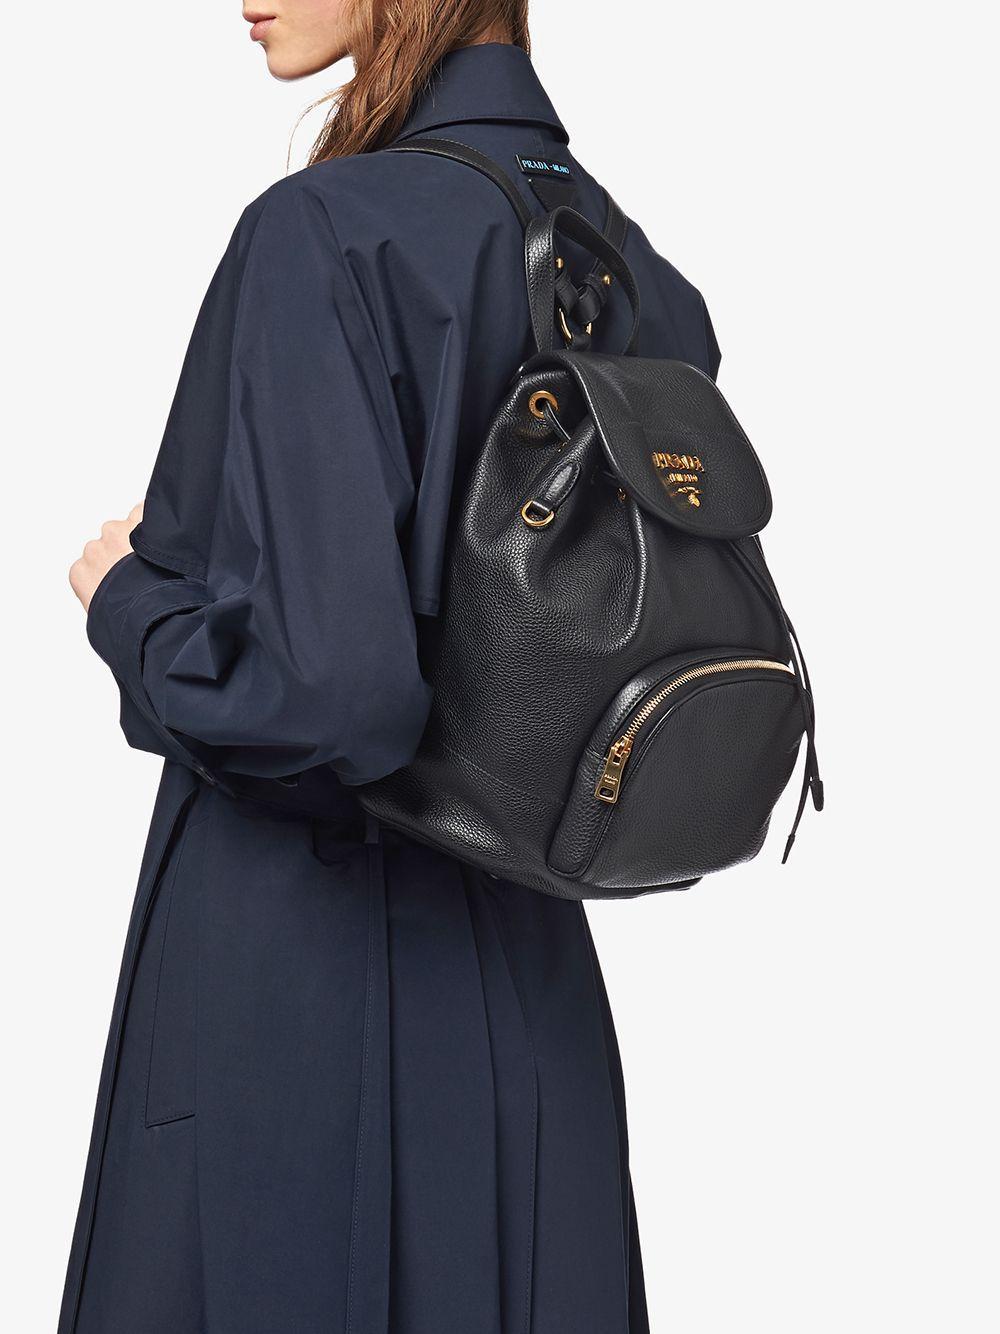 Prada Leather Backpack in Black | Lyst